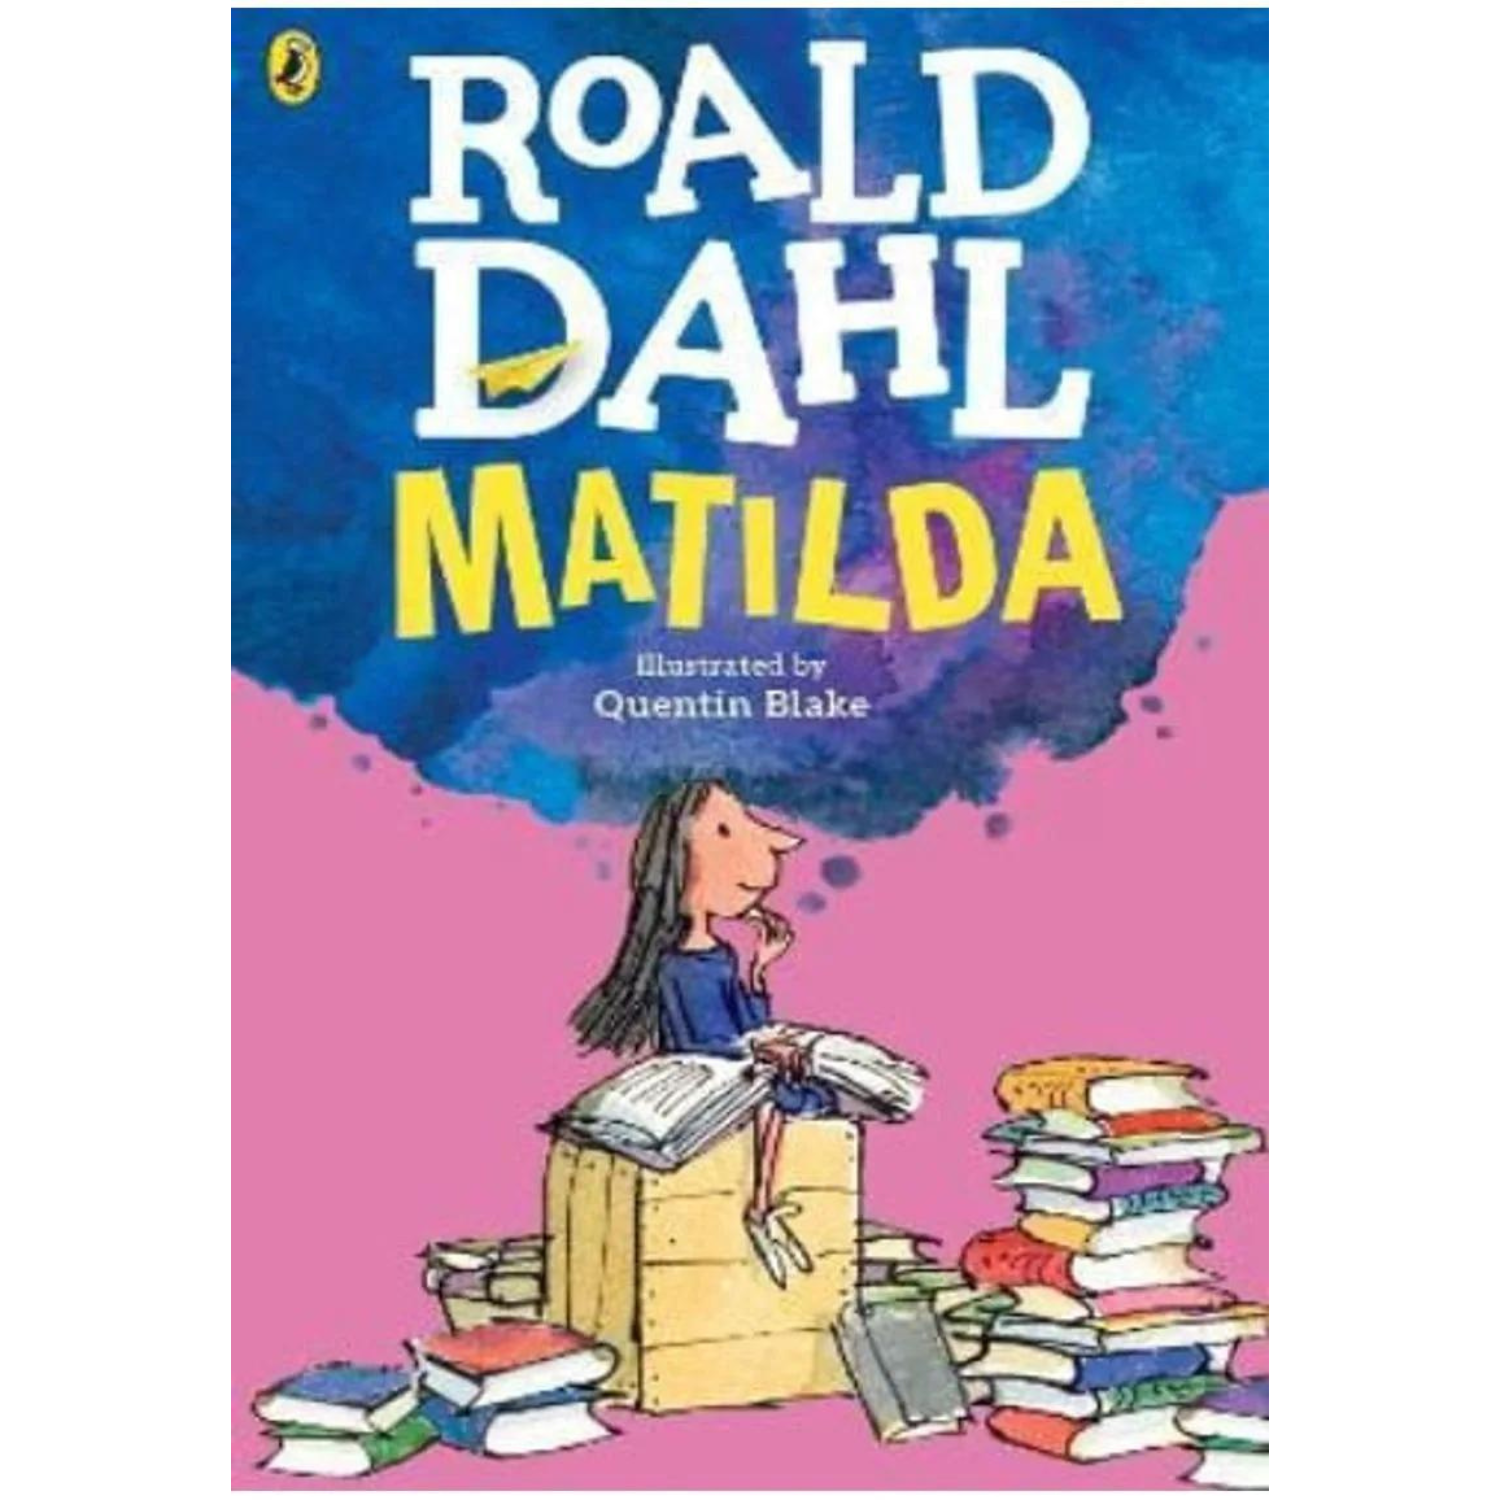 Libro en inglés Matilda